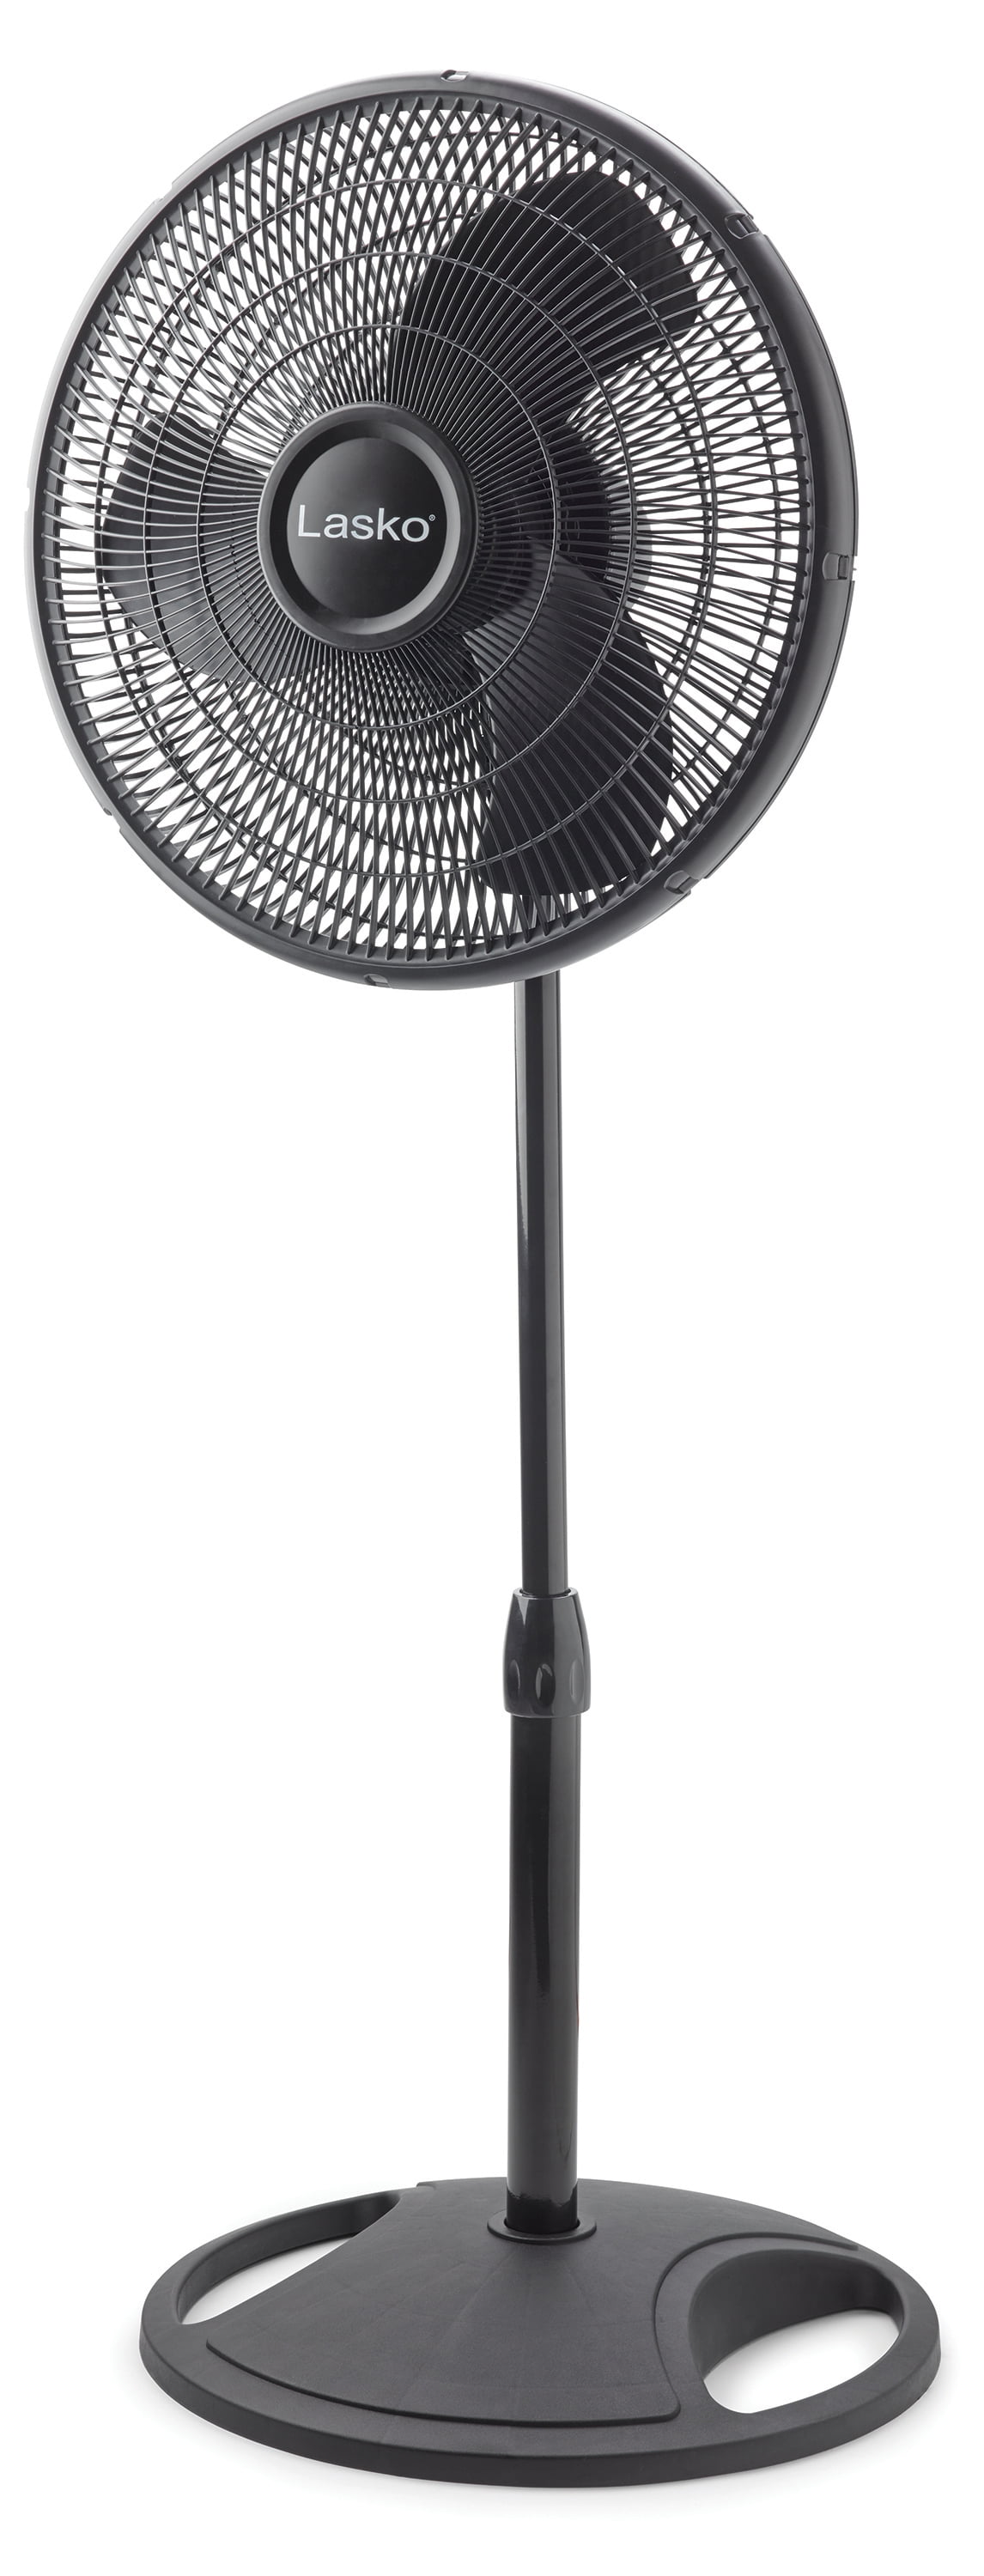 Adjustable Black Home Improvement 16" Oscillating Pedestal Stand 3-Speed Fan 